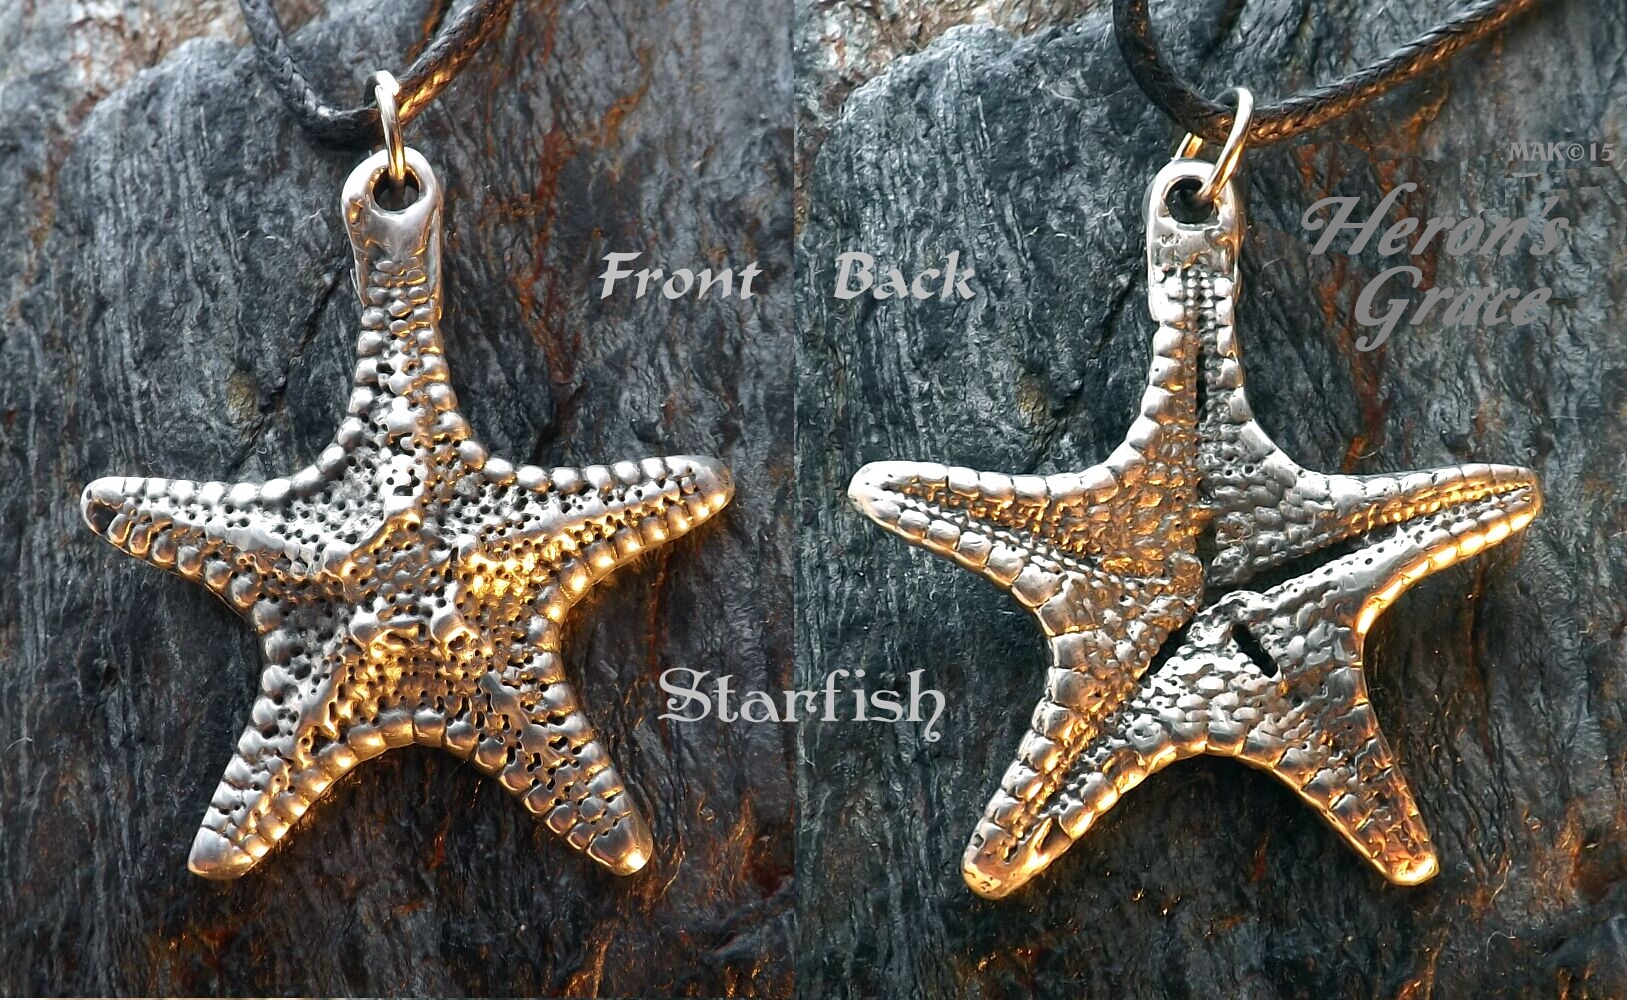 Starfish - Medium #070-StarfishMedium